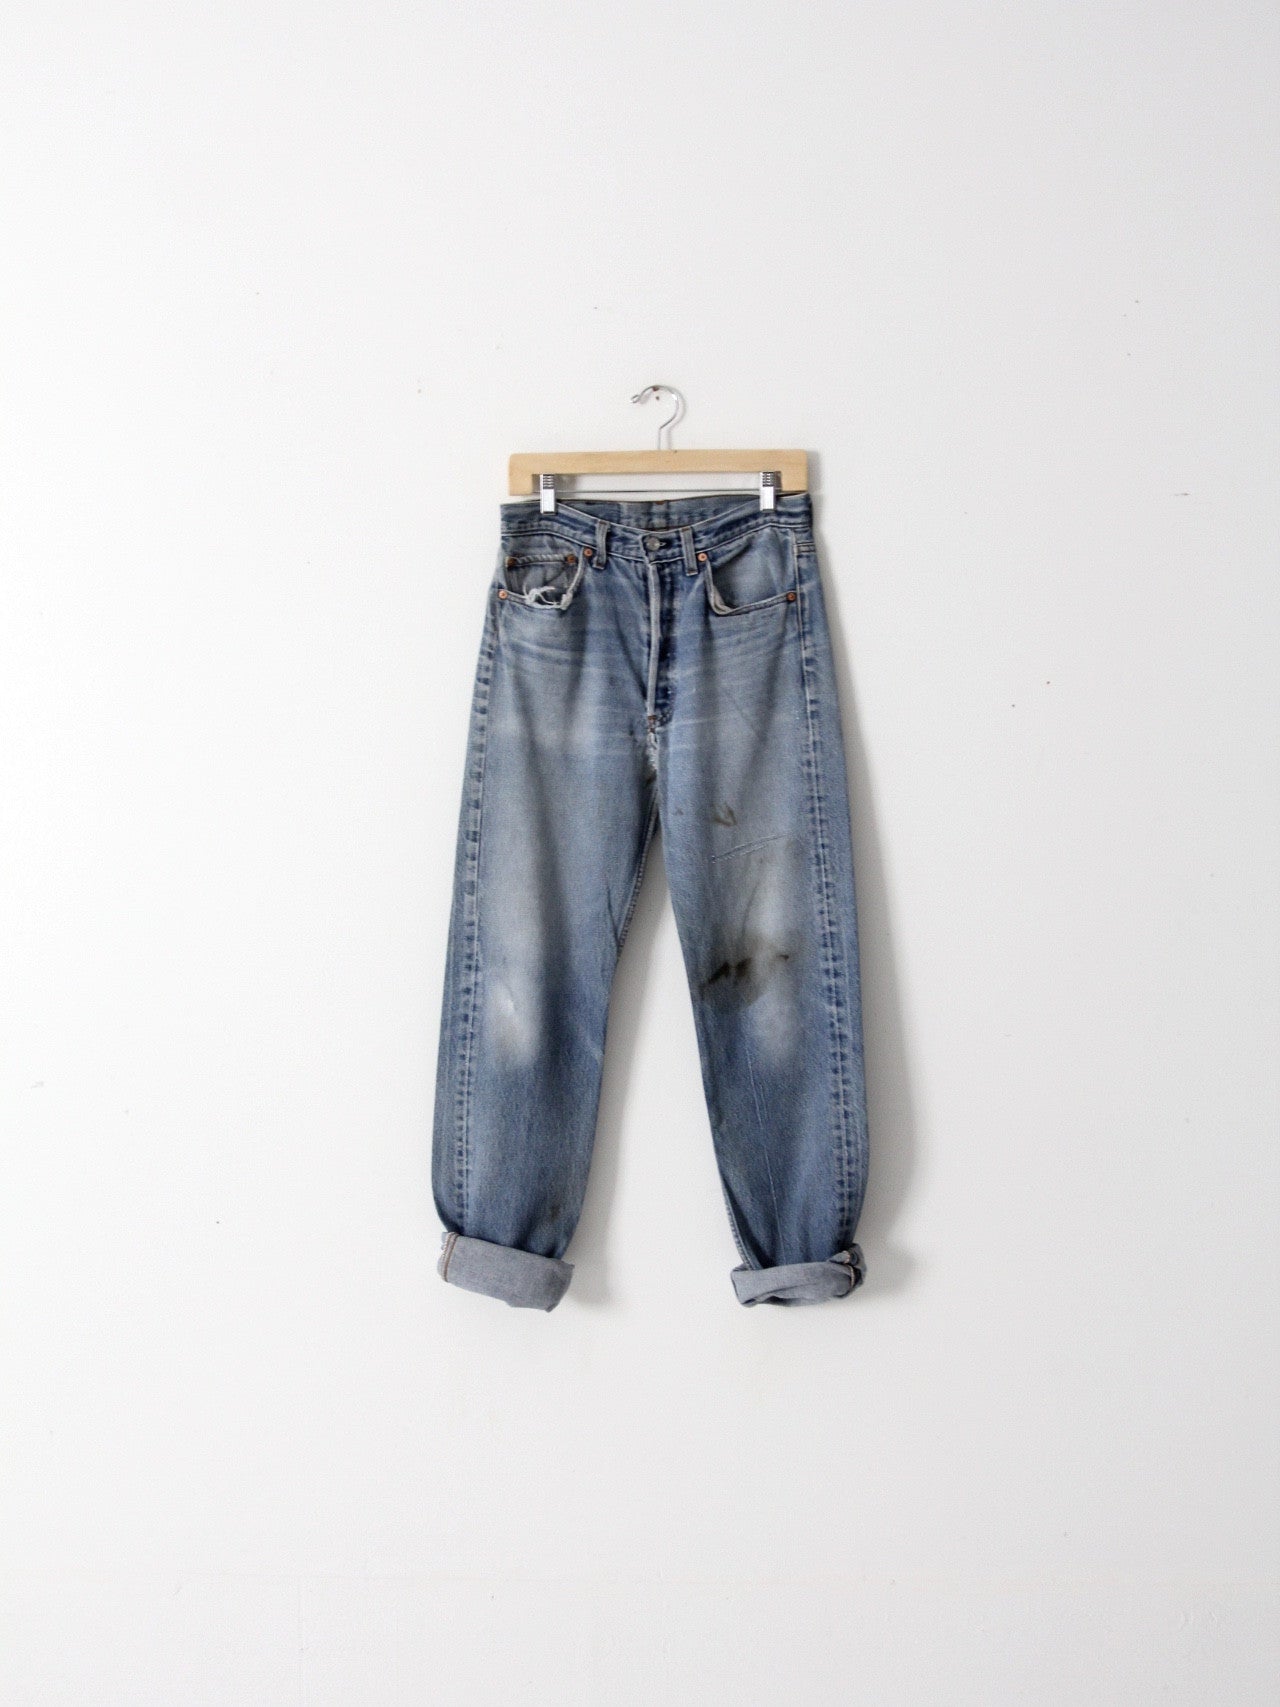 Vintage Levis 646 Denim Jeans / Waist 30 / vintage 70s flare leg